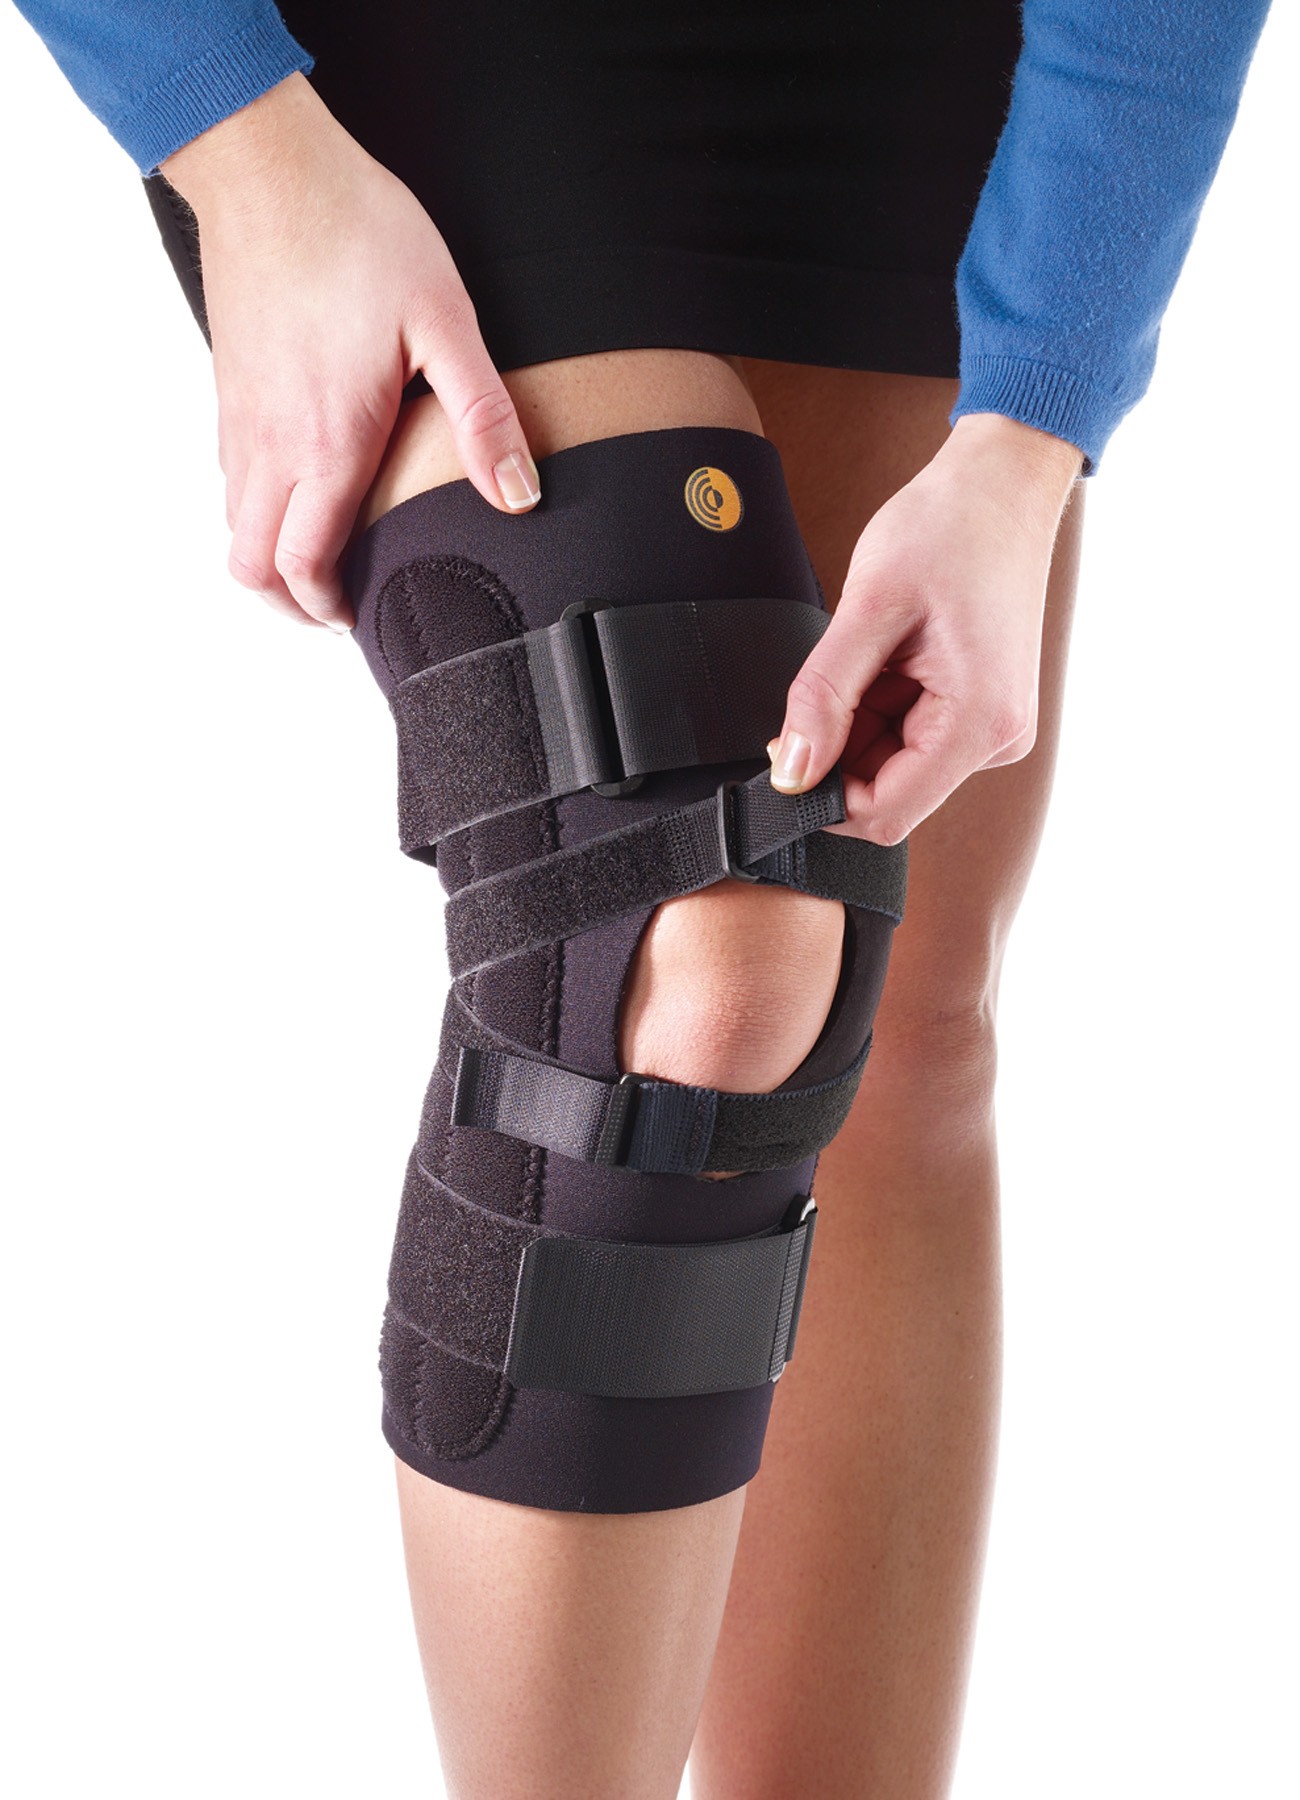 Ossur Formfit ROM Knee Braces ON SALE - FREE Shipping